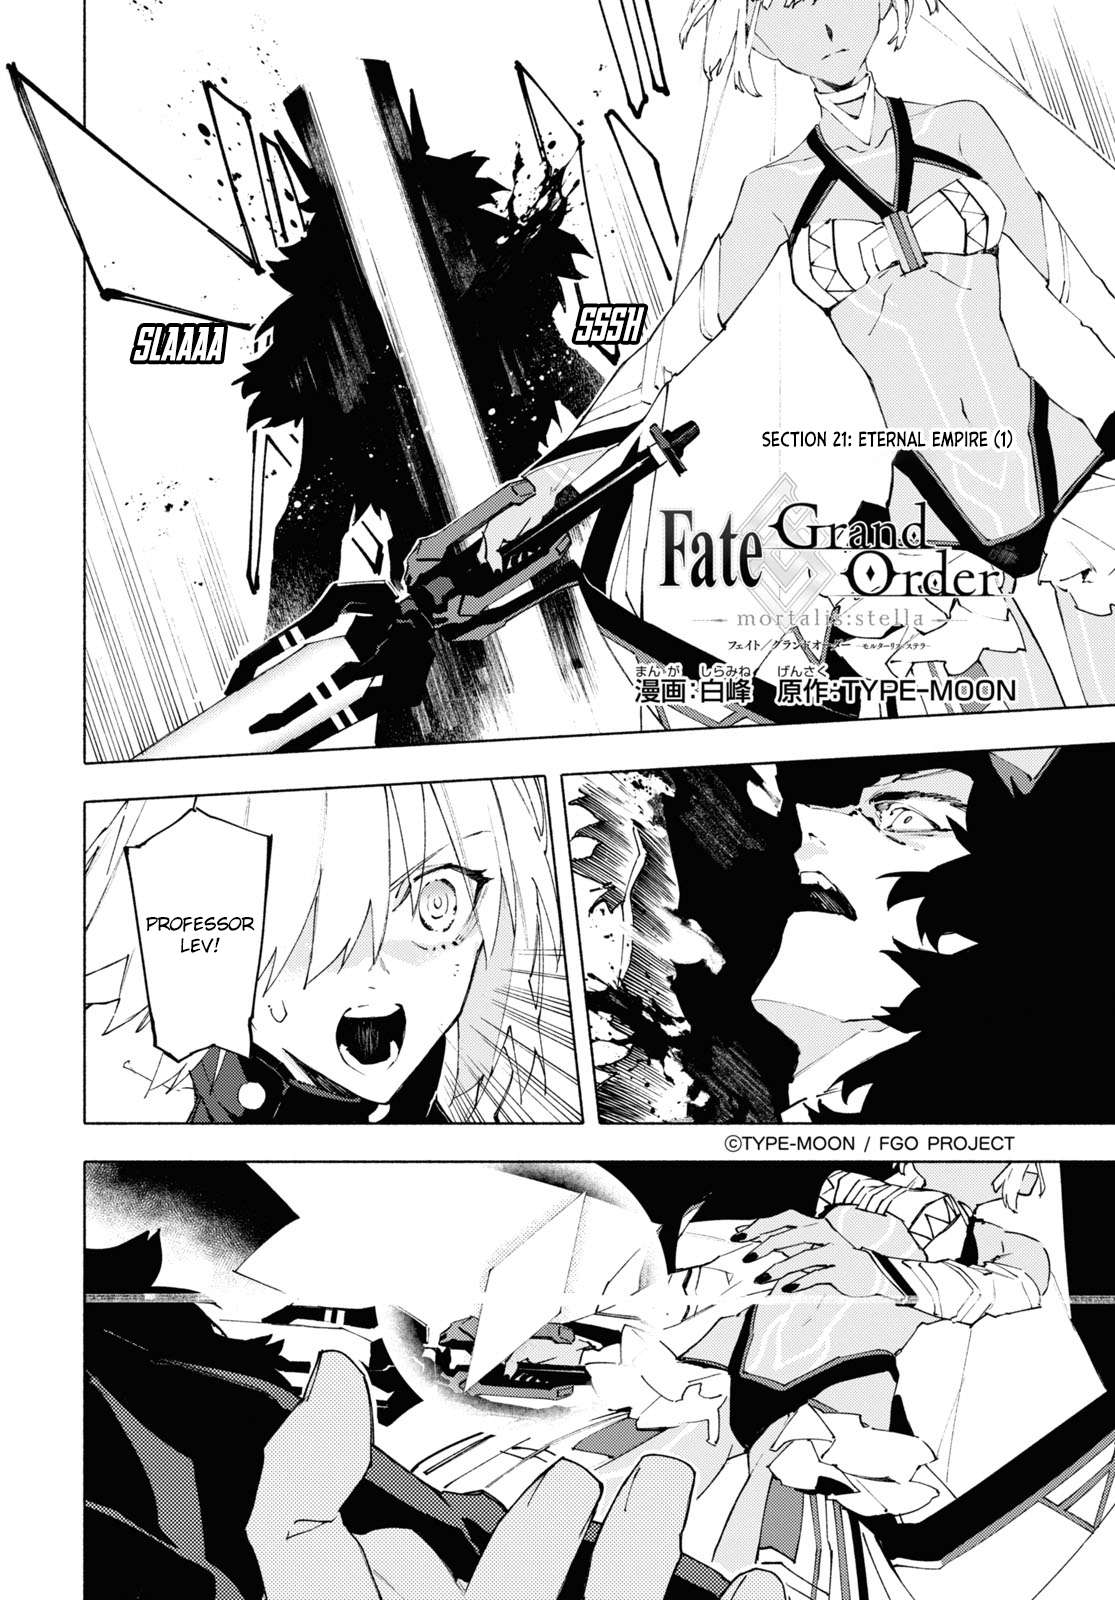 Fate/Grand Order -mortalis:stella- - chapter 21.1 - #1